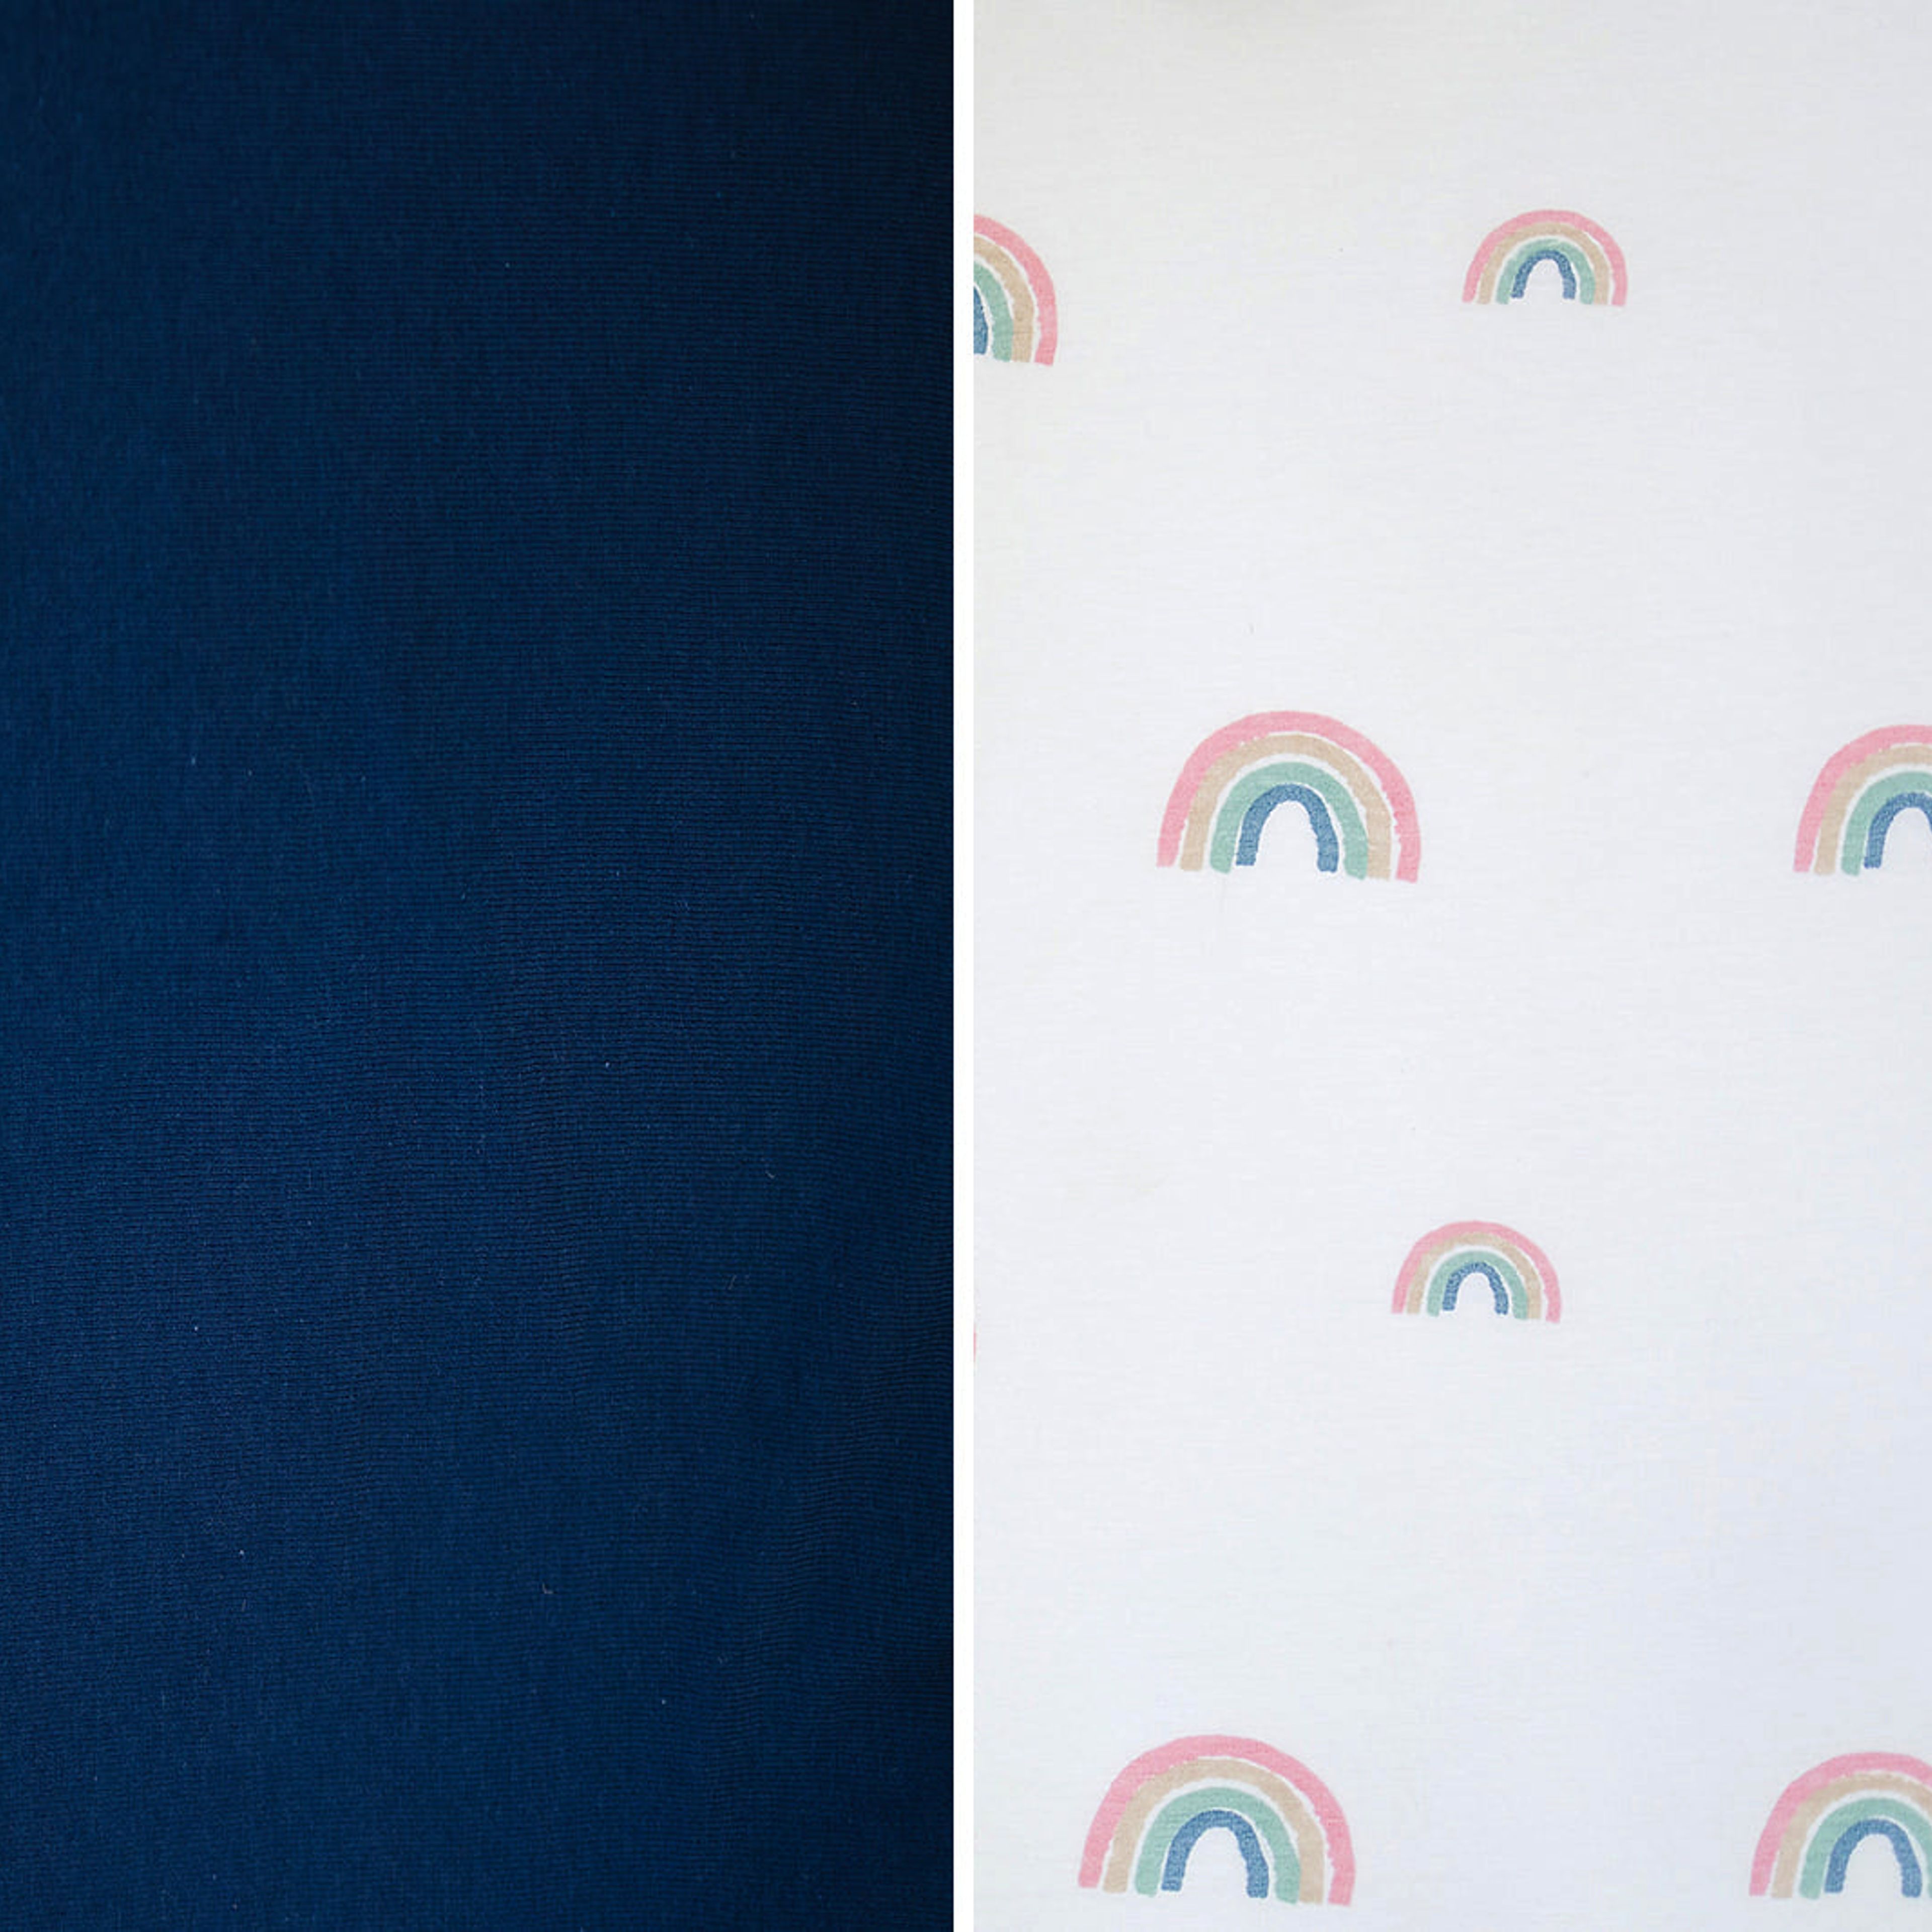 Ecolino Pillowcase, 100% Organic Cotton, 2 Pack, Navy Blue + Rainbow